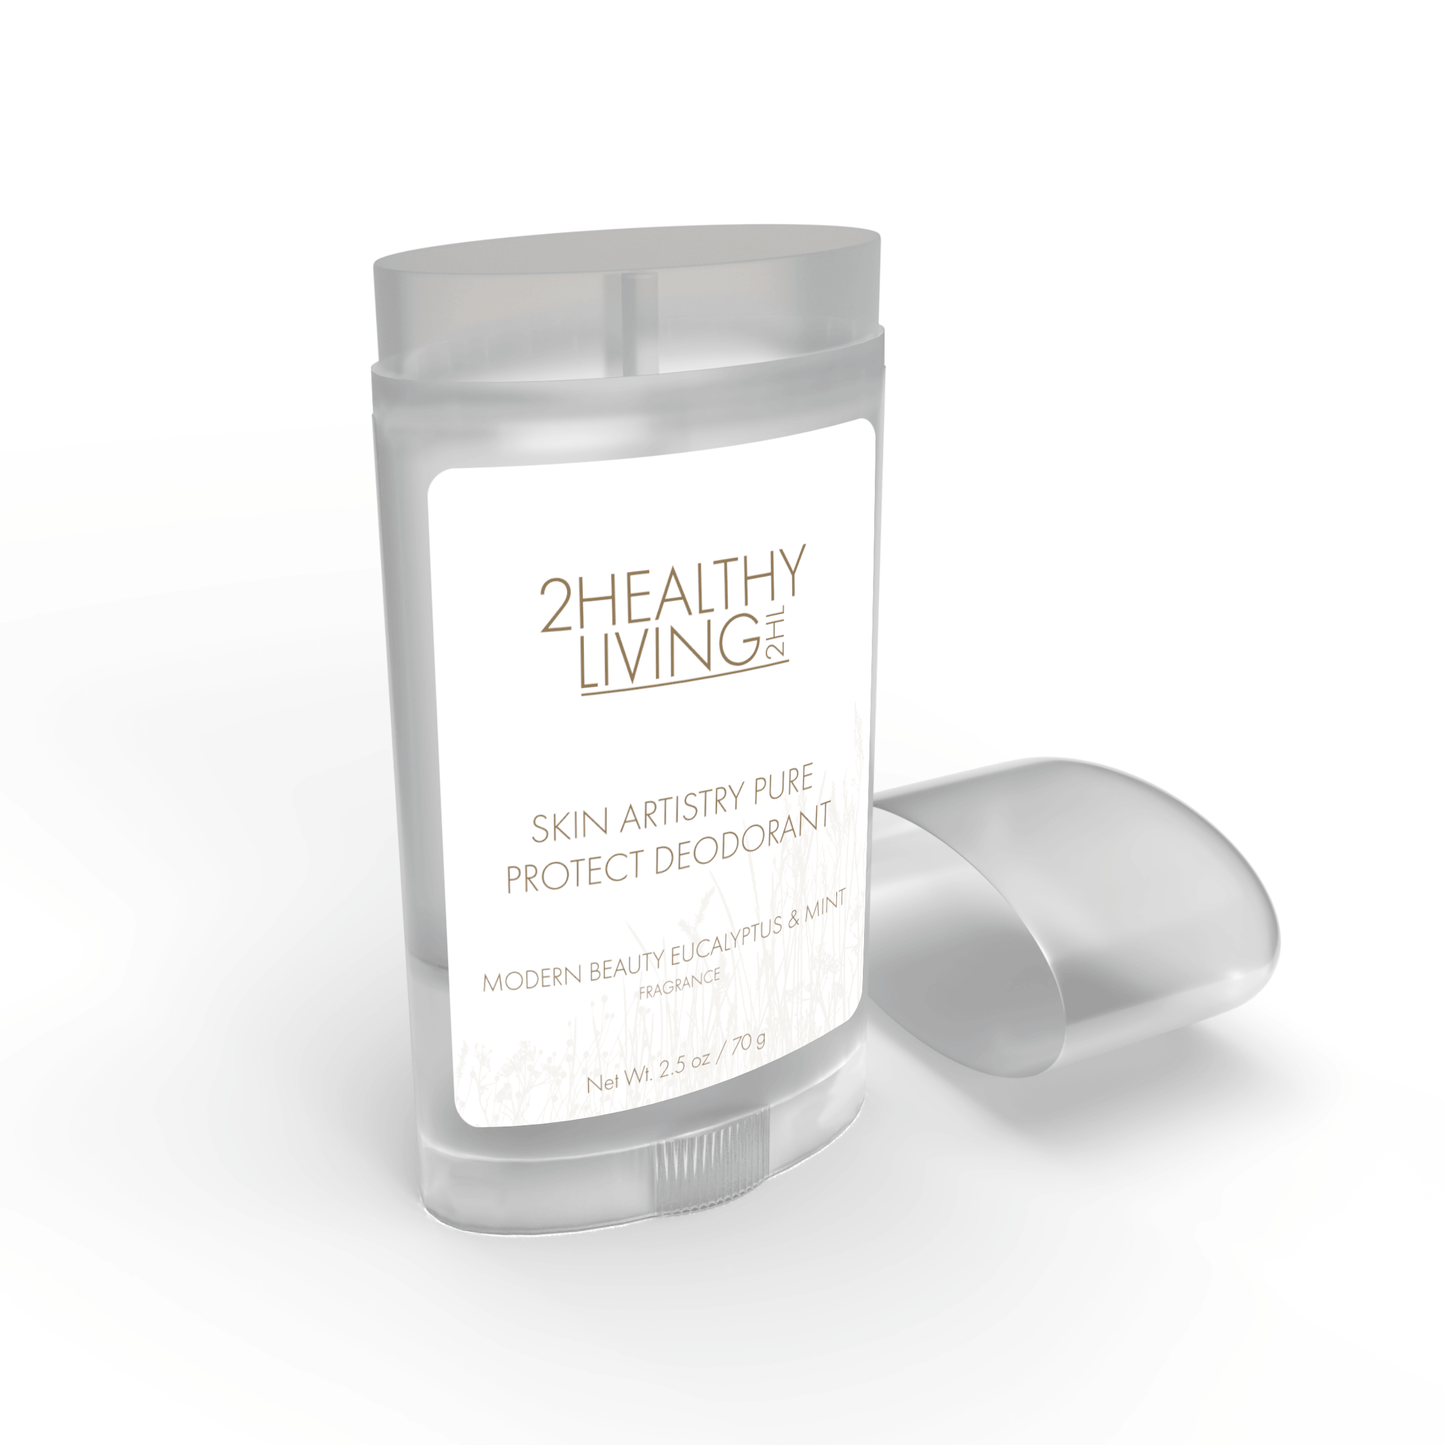 Modern Beauty Eucalyptus & Mint Skin Artistry Pure Protect Deodorant